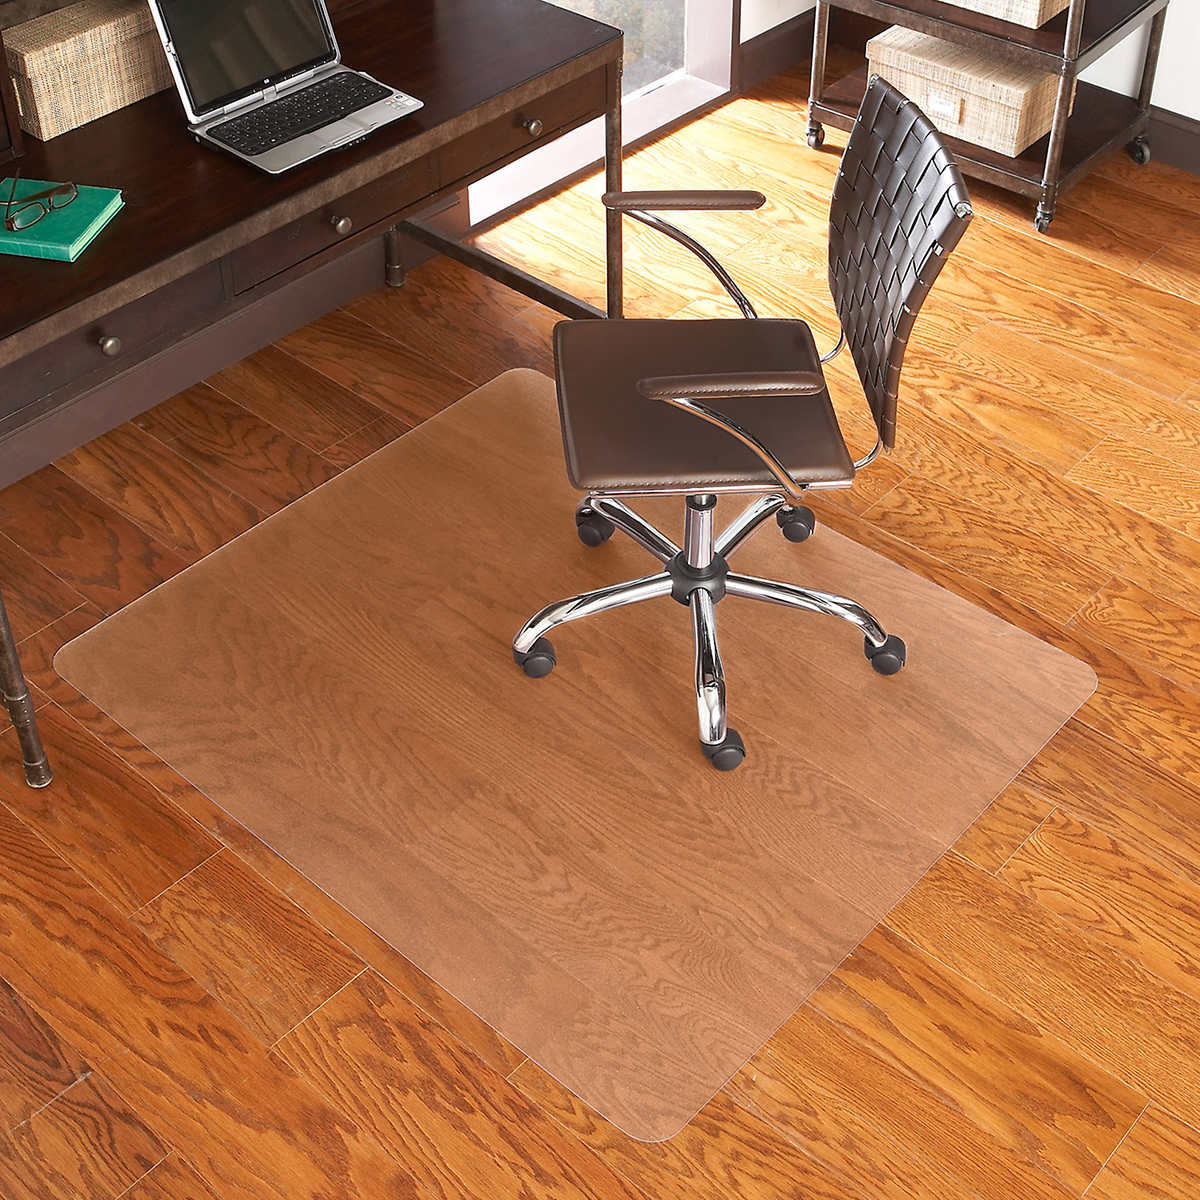 HOMEK Crystal Clear Chair Mat for Hardwood Floor 1/8” Thick 48” x 30” Chair Mat for Hard Floors Heavy Duty Office Mat